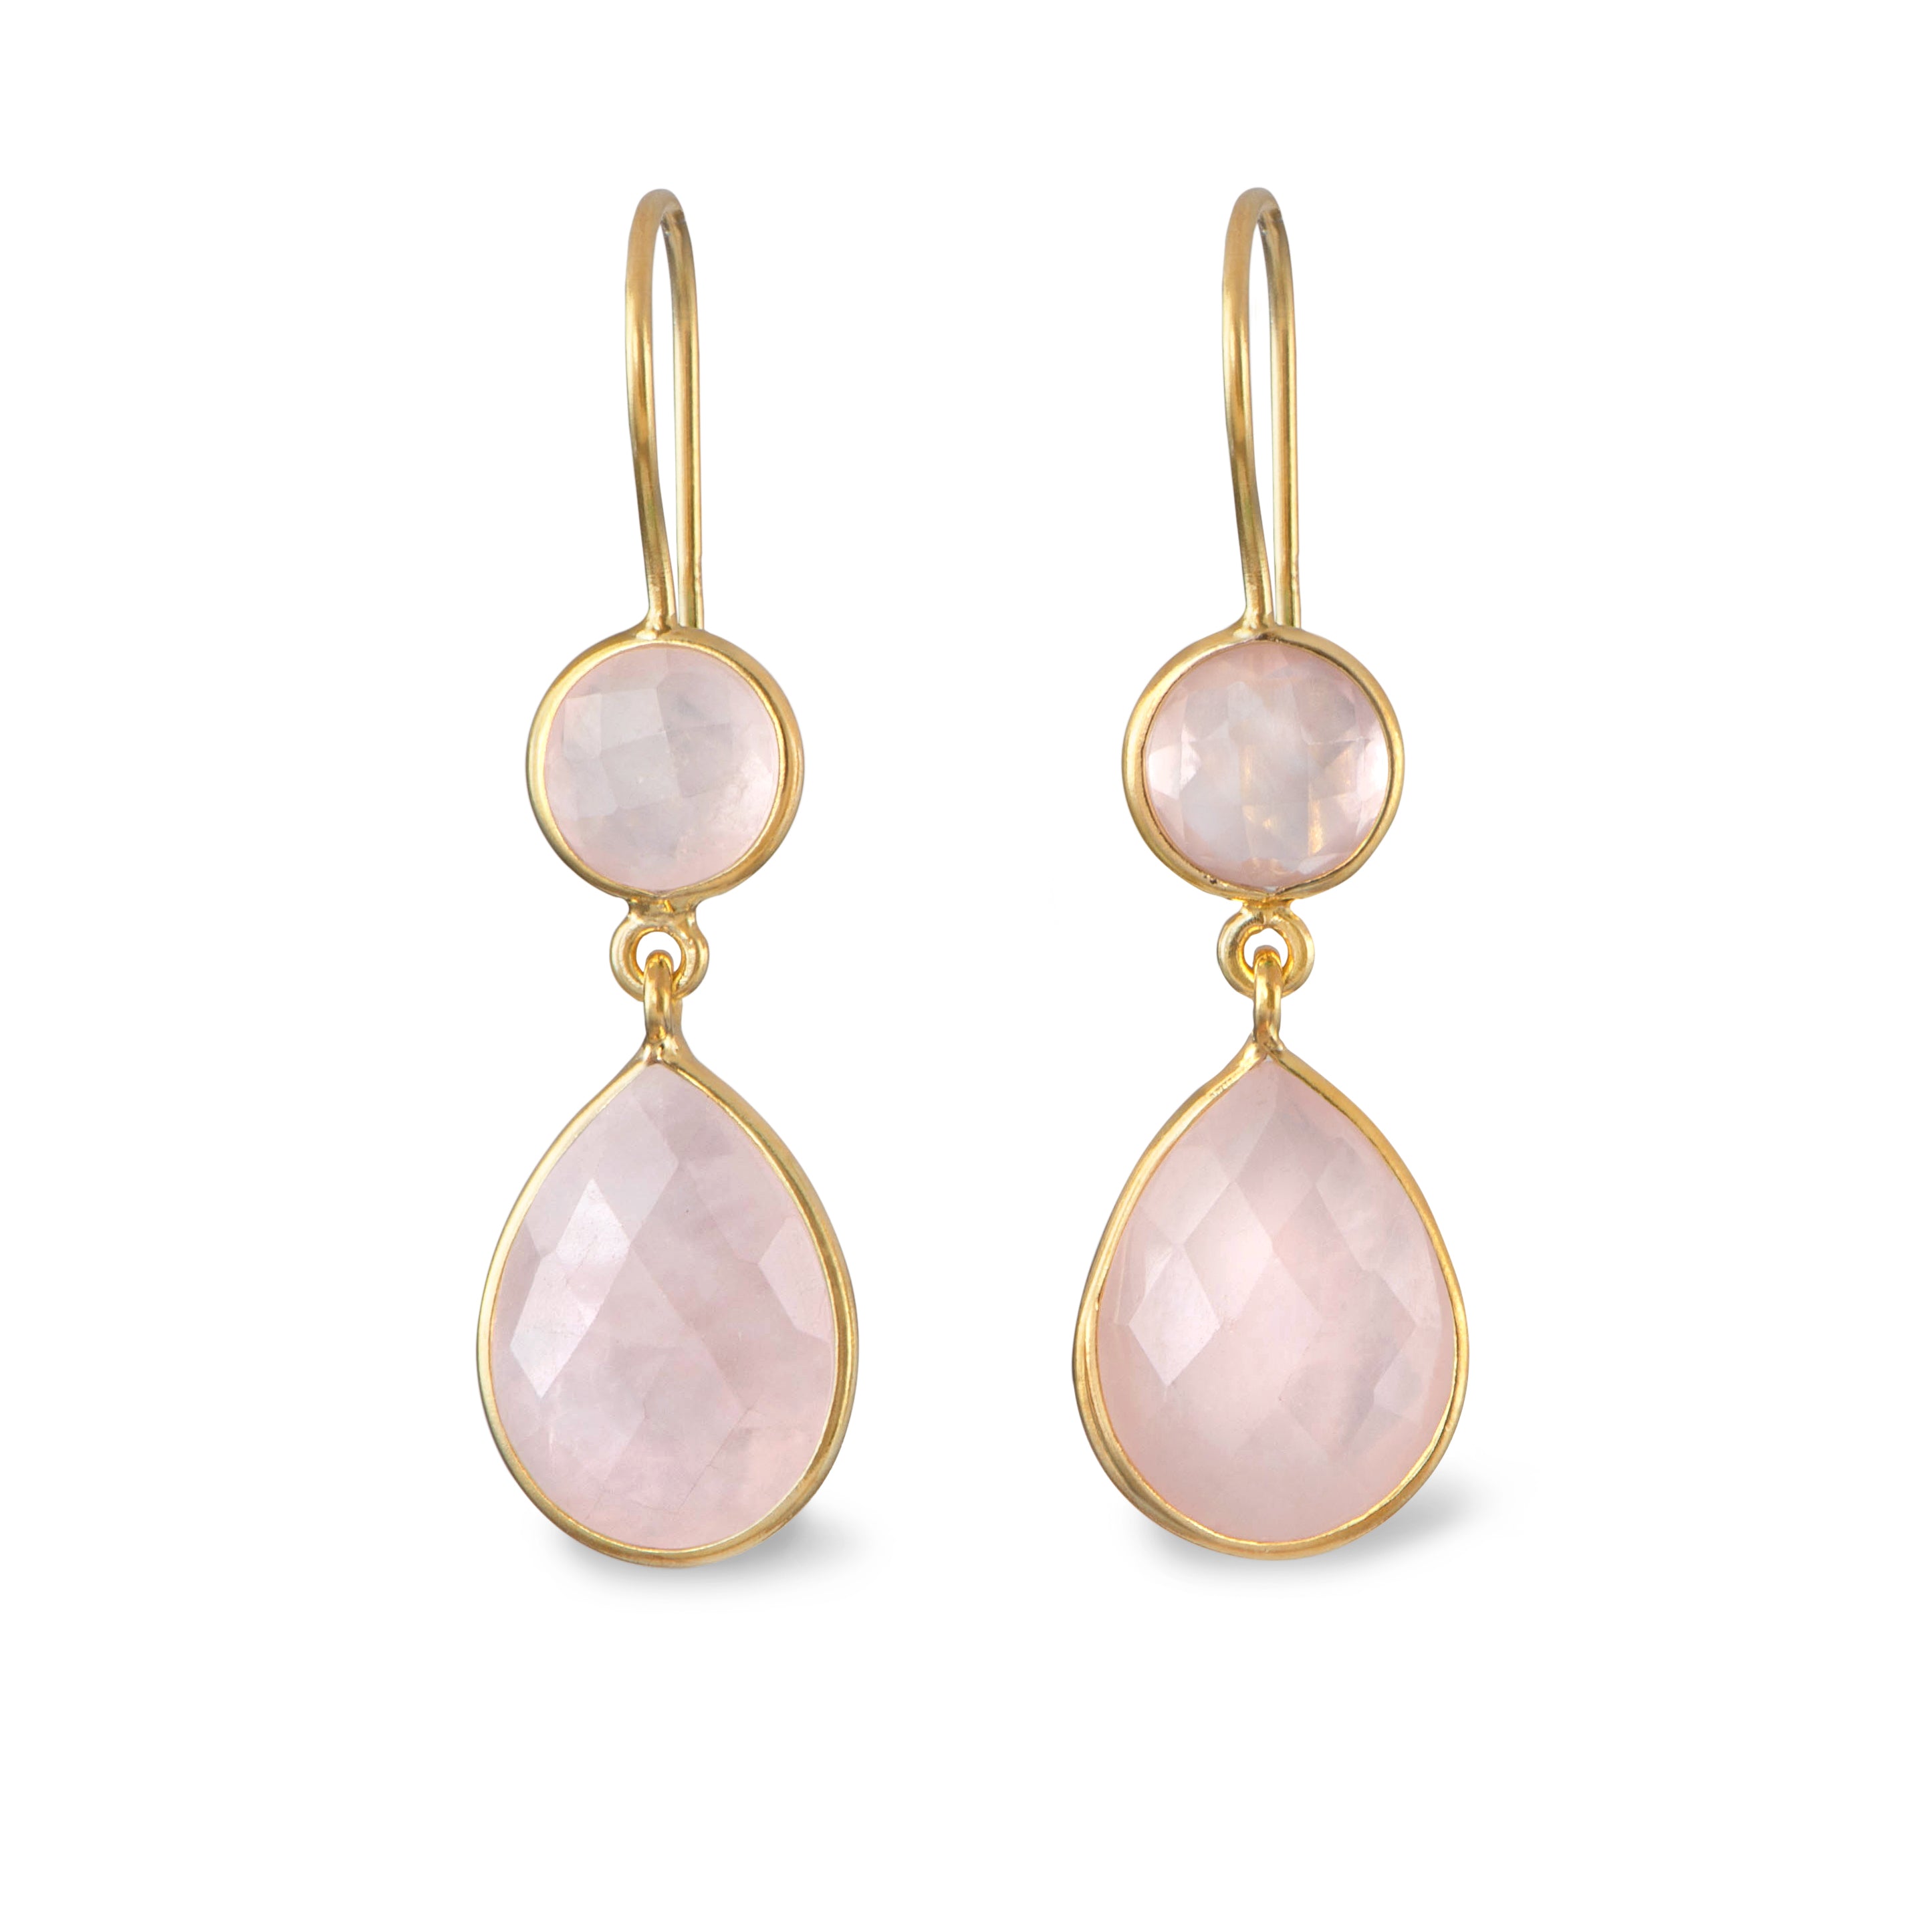 Rose Quartz Gemstone Two Stone Earrings in Gold Plated Sterling Silver - Teardrop